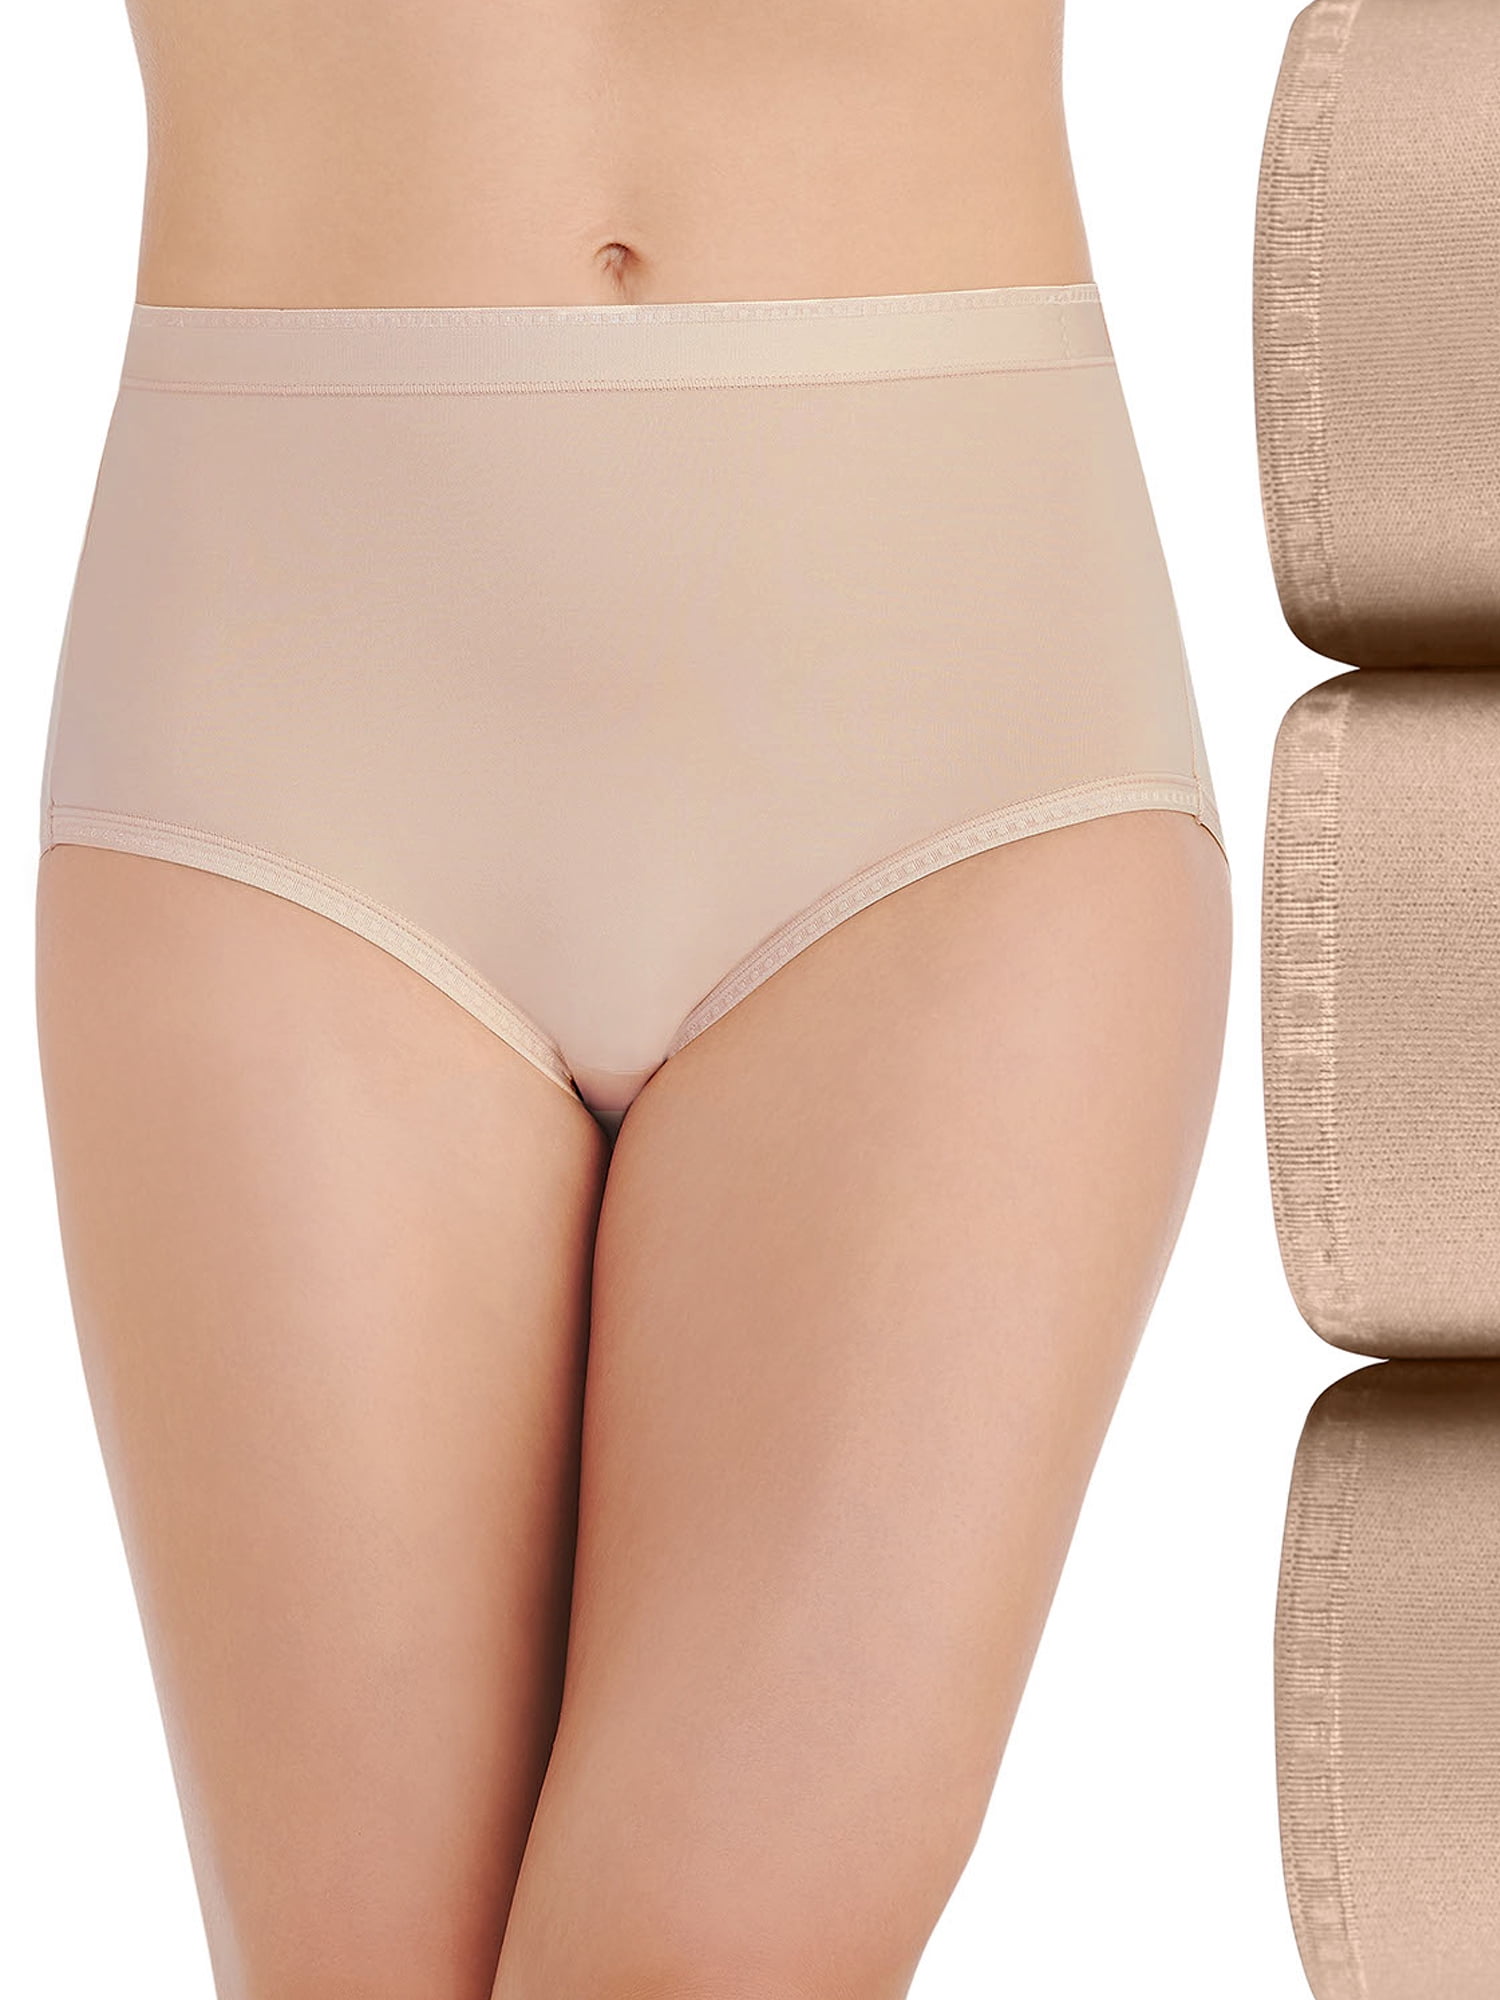 Vanity Fair Women's Comfort Where It Counts Brief Underwear, 3 Pack 